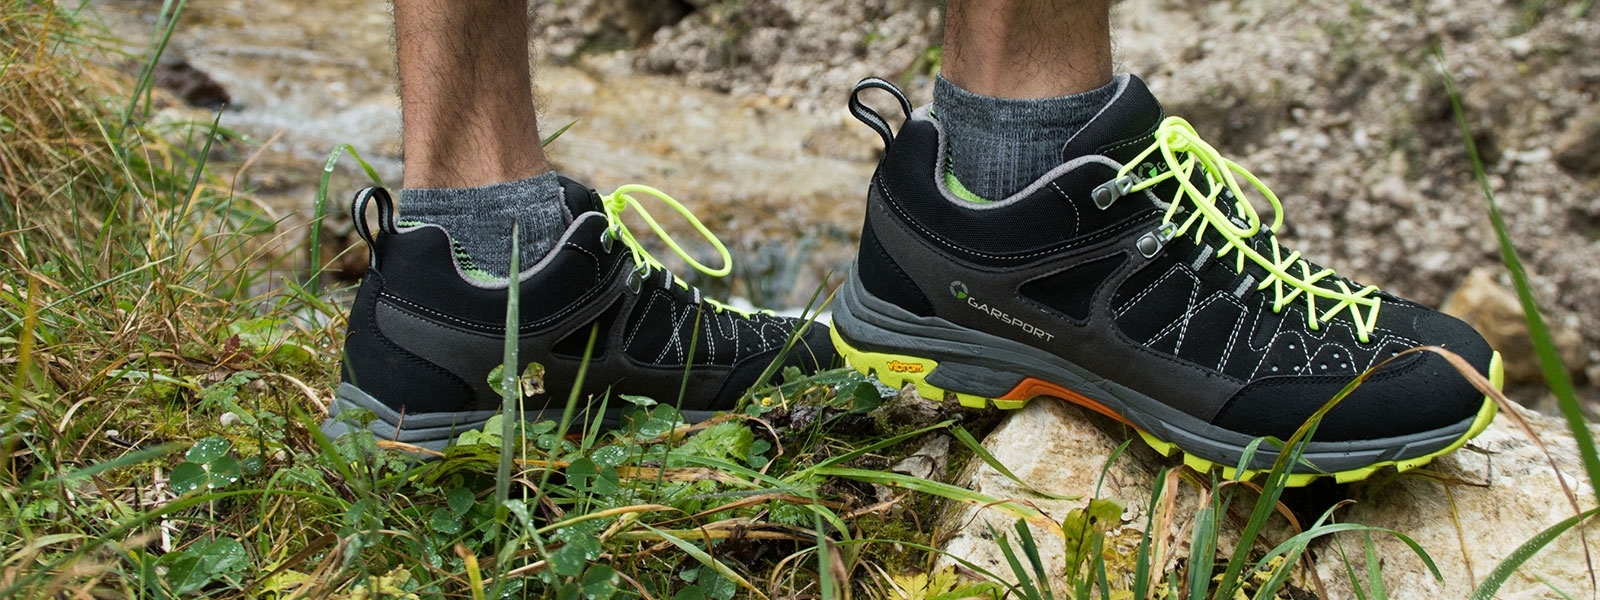 Running ultra trail shoes for running, approach, nordi walking mountain